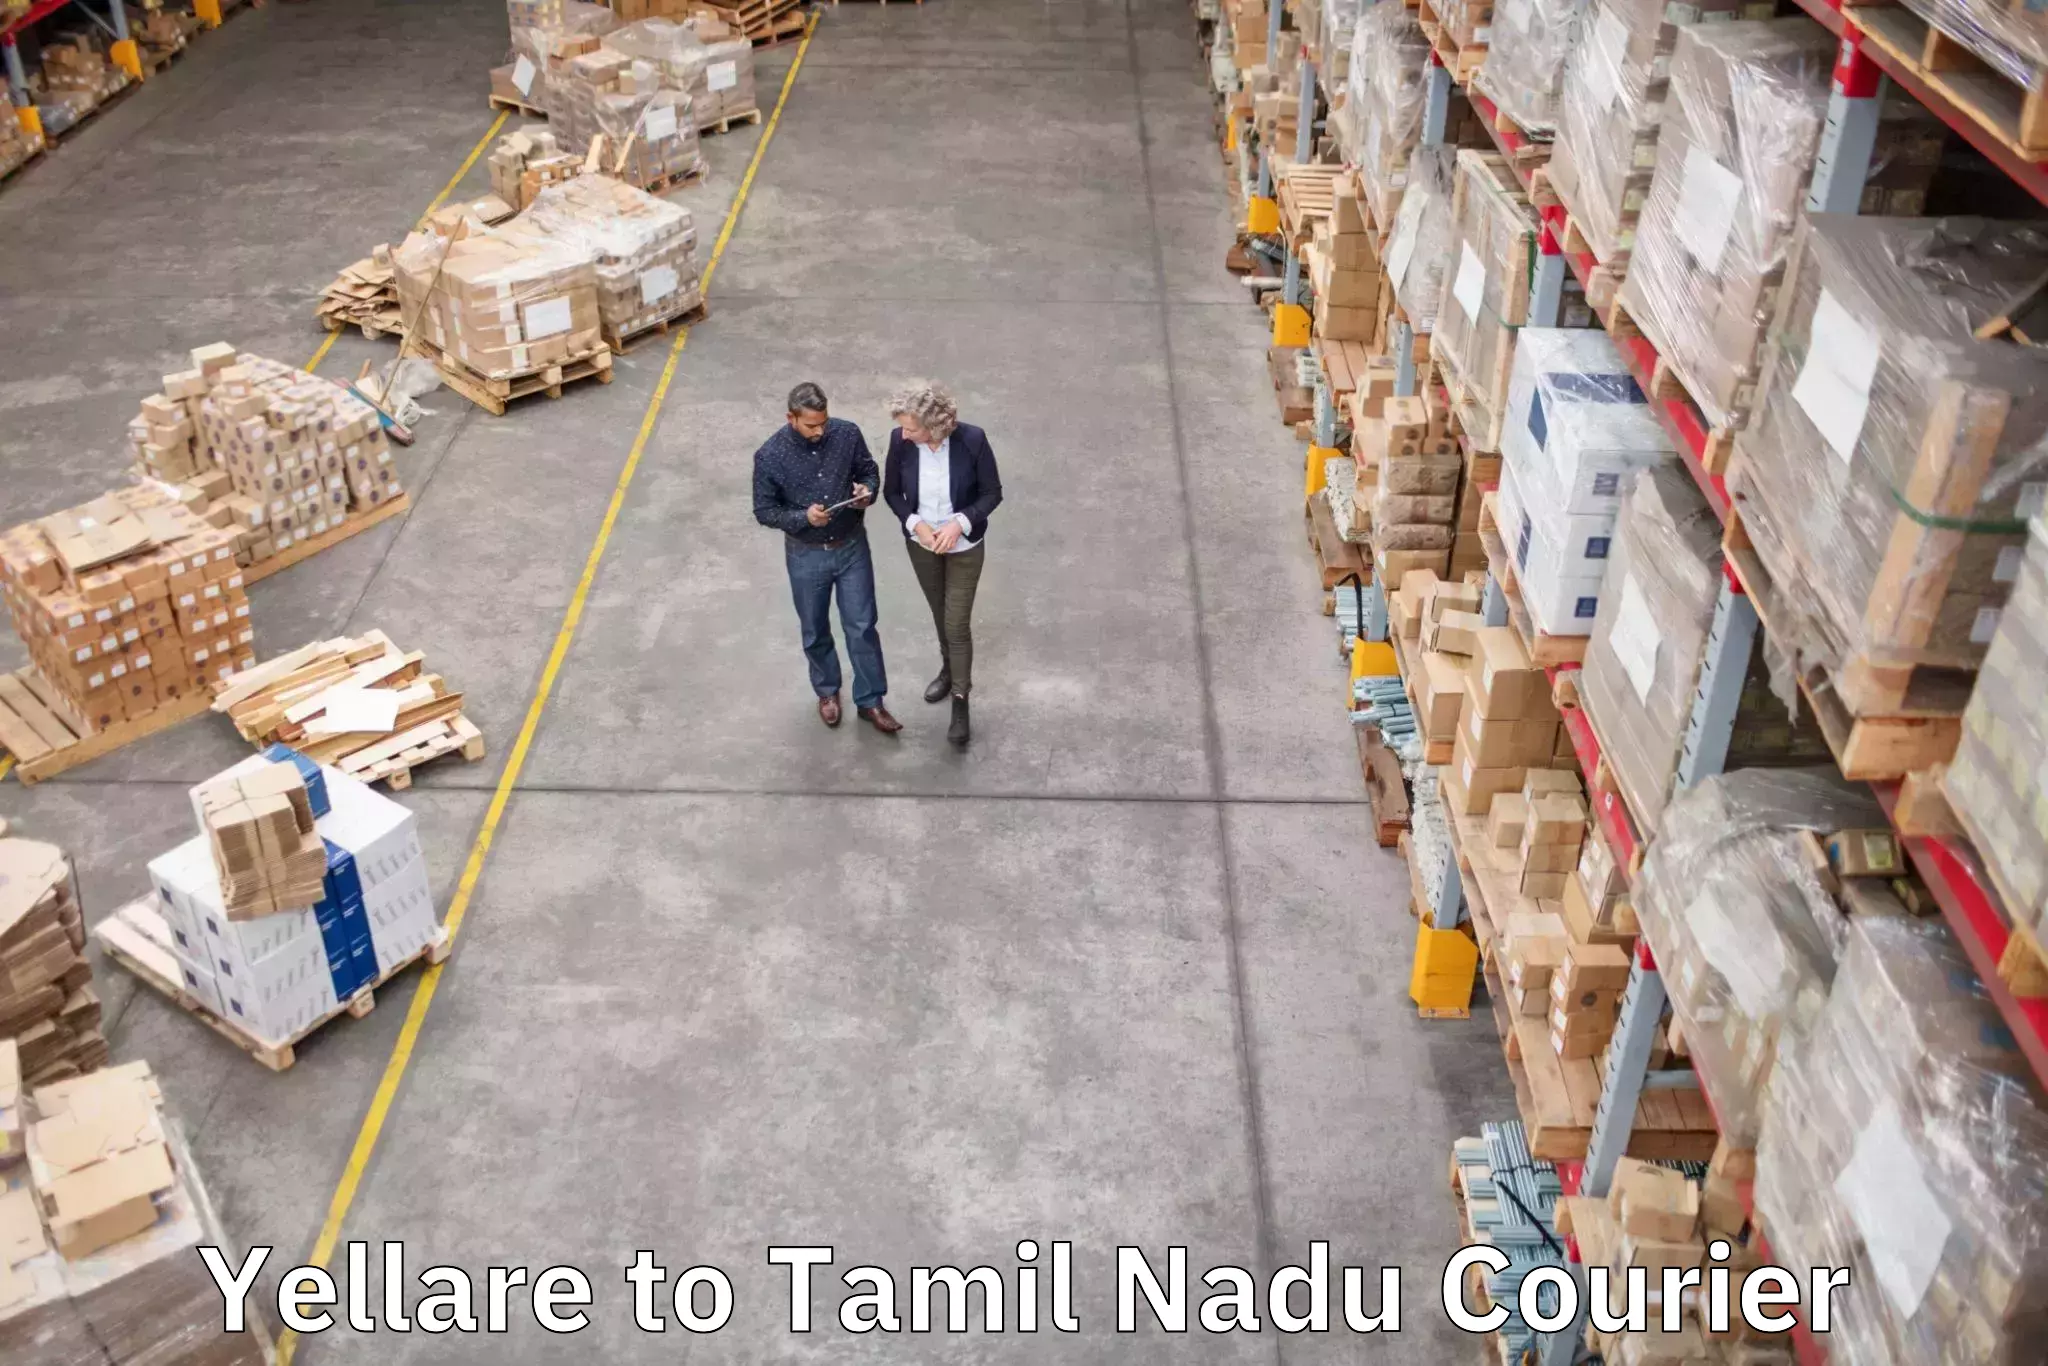 Luggage transport consultancy Yellare to Tamil Nadu